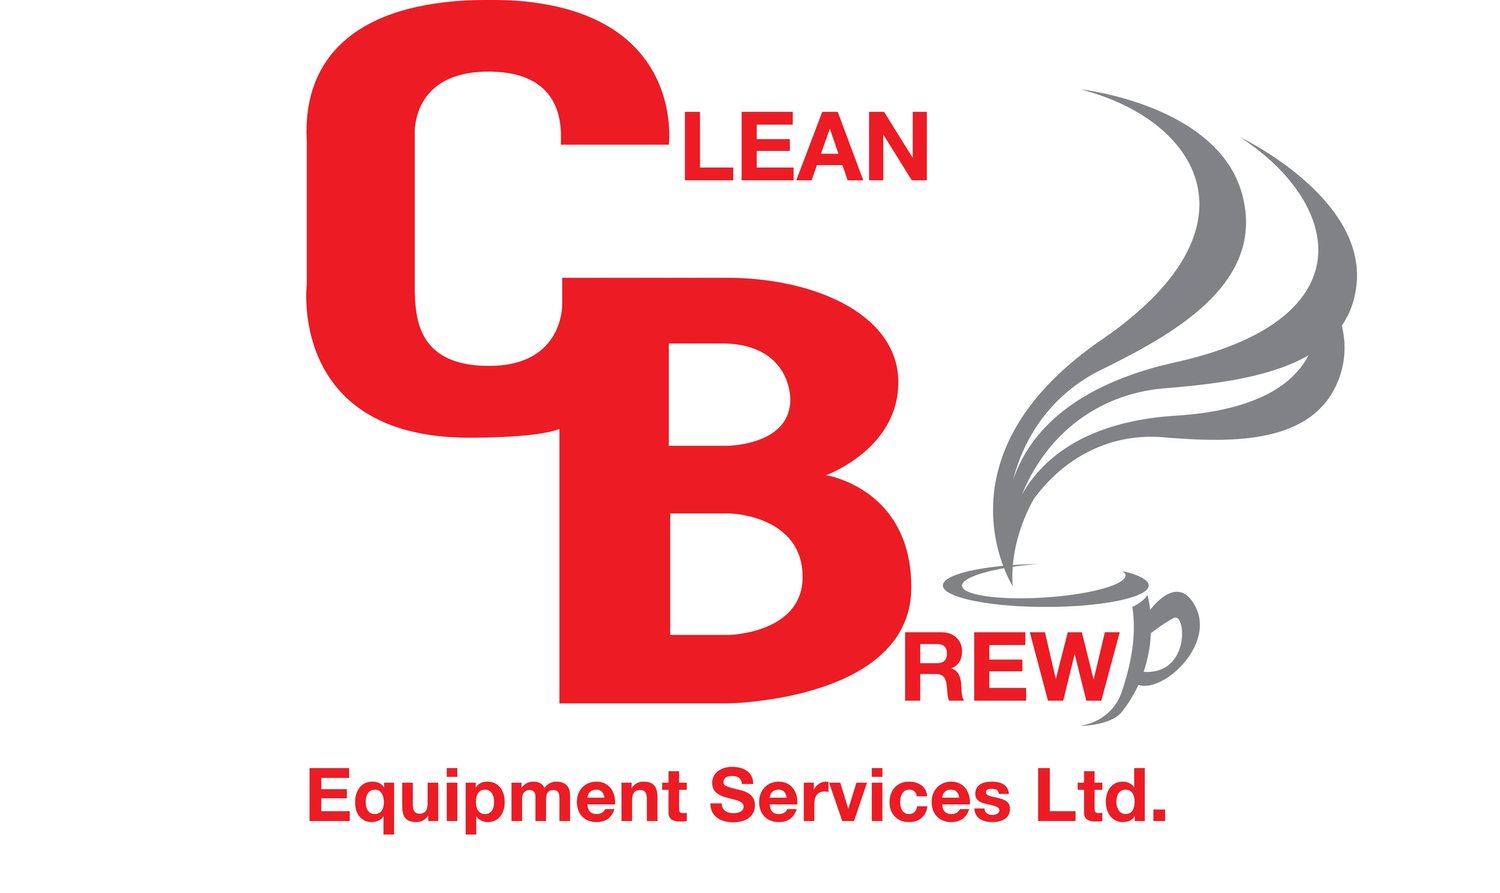 Clean Brew Equipment Services